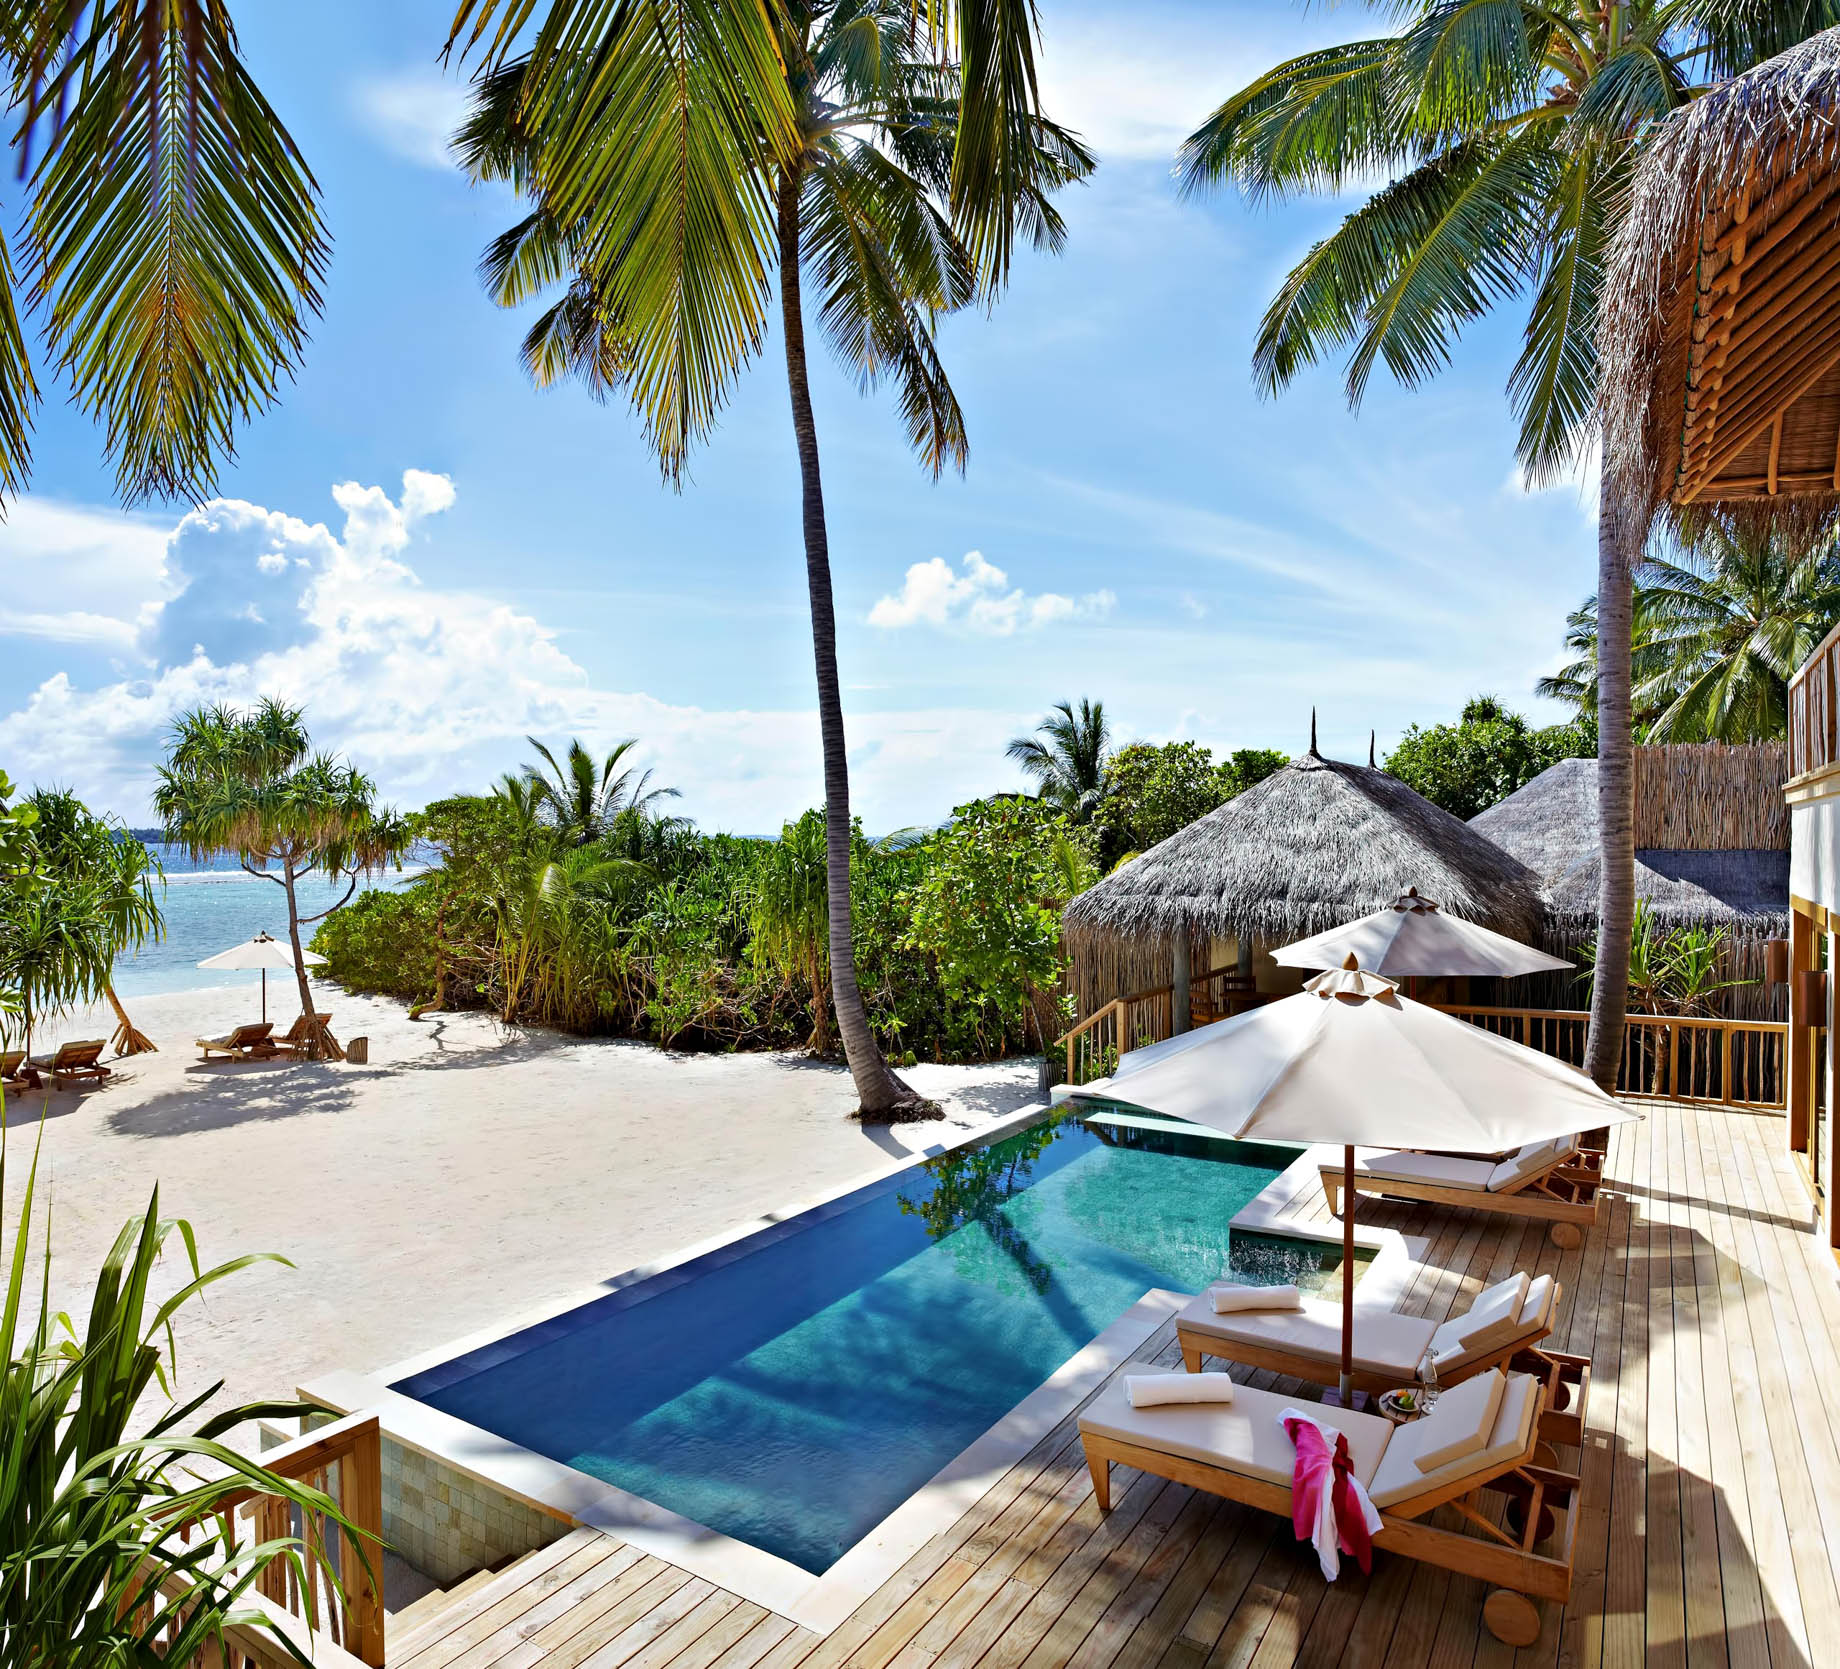 Six Senses Laamu Resort - Laamu Atoll, Maldives - Ocean Beachfront Villa with Pool